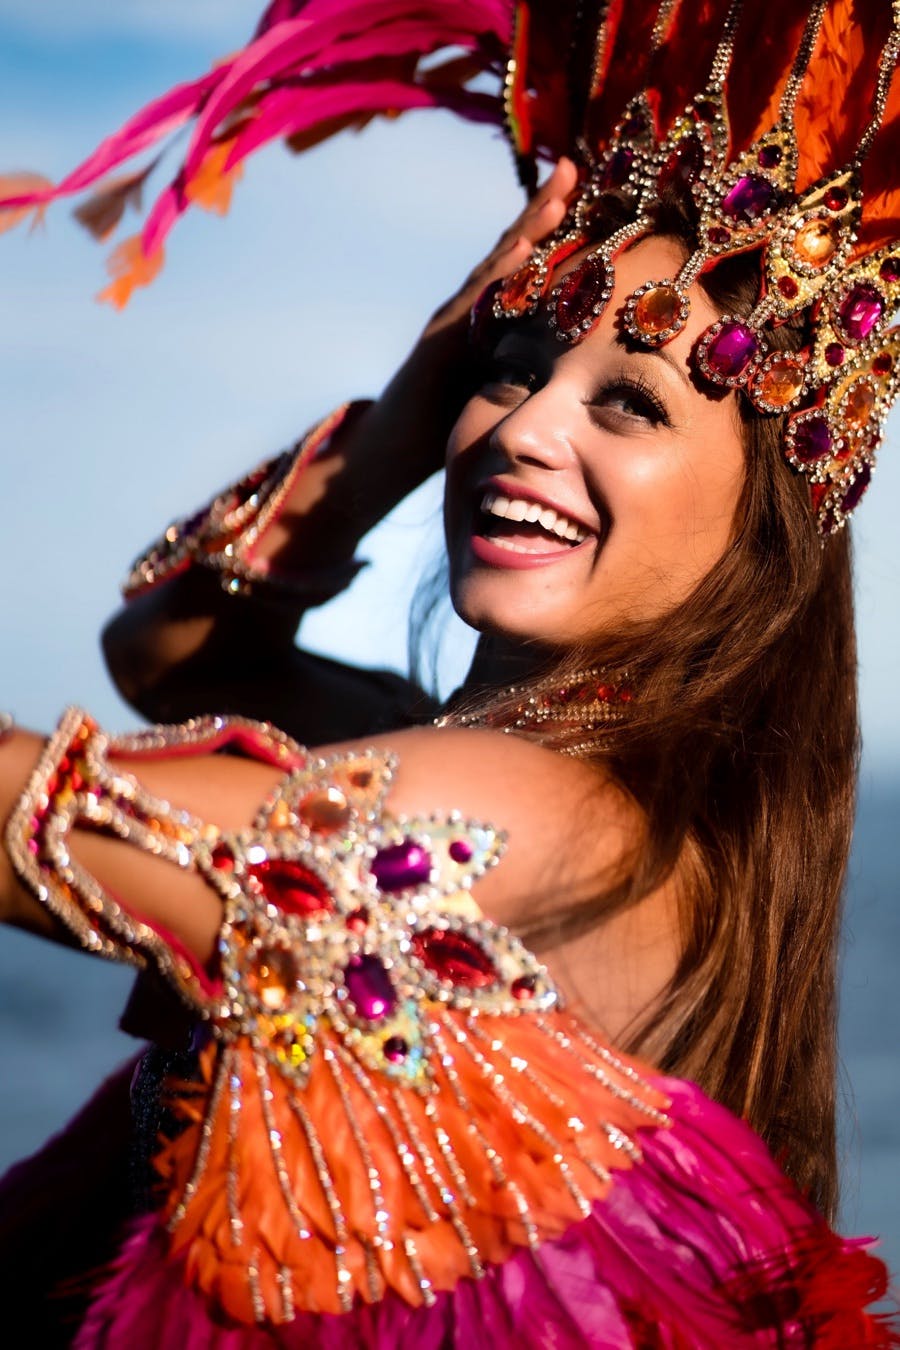 Gisella Fereirra smiles while dancing in samba attire